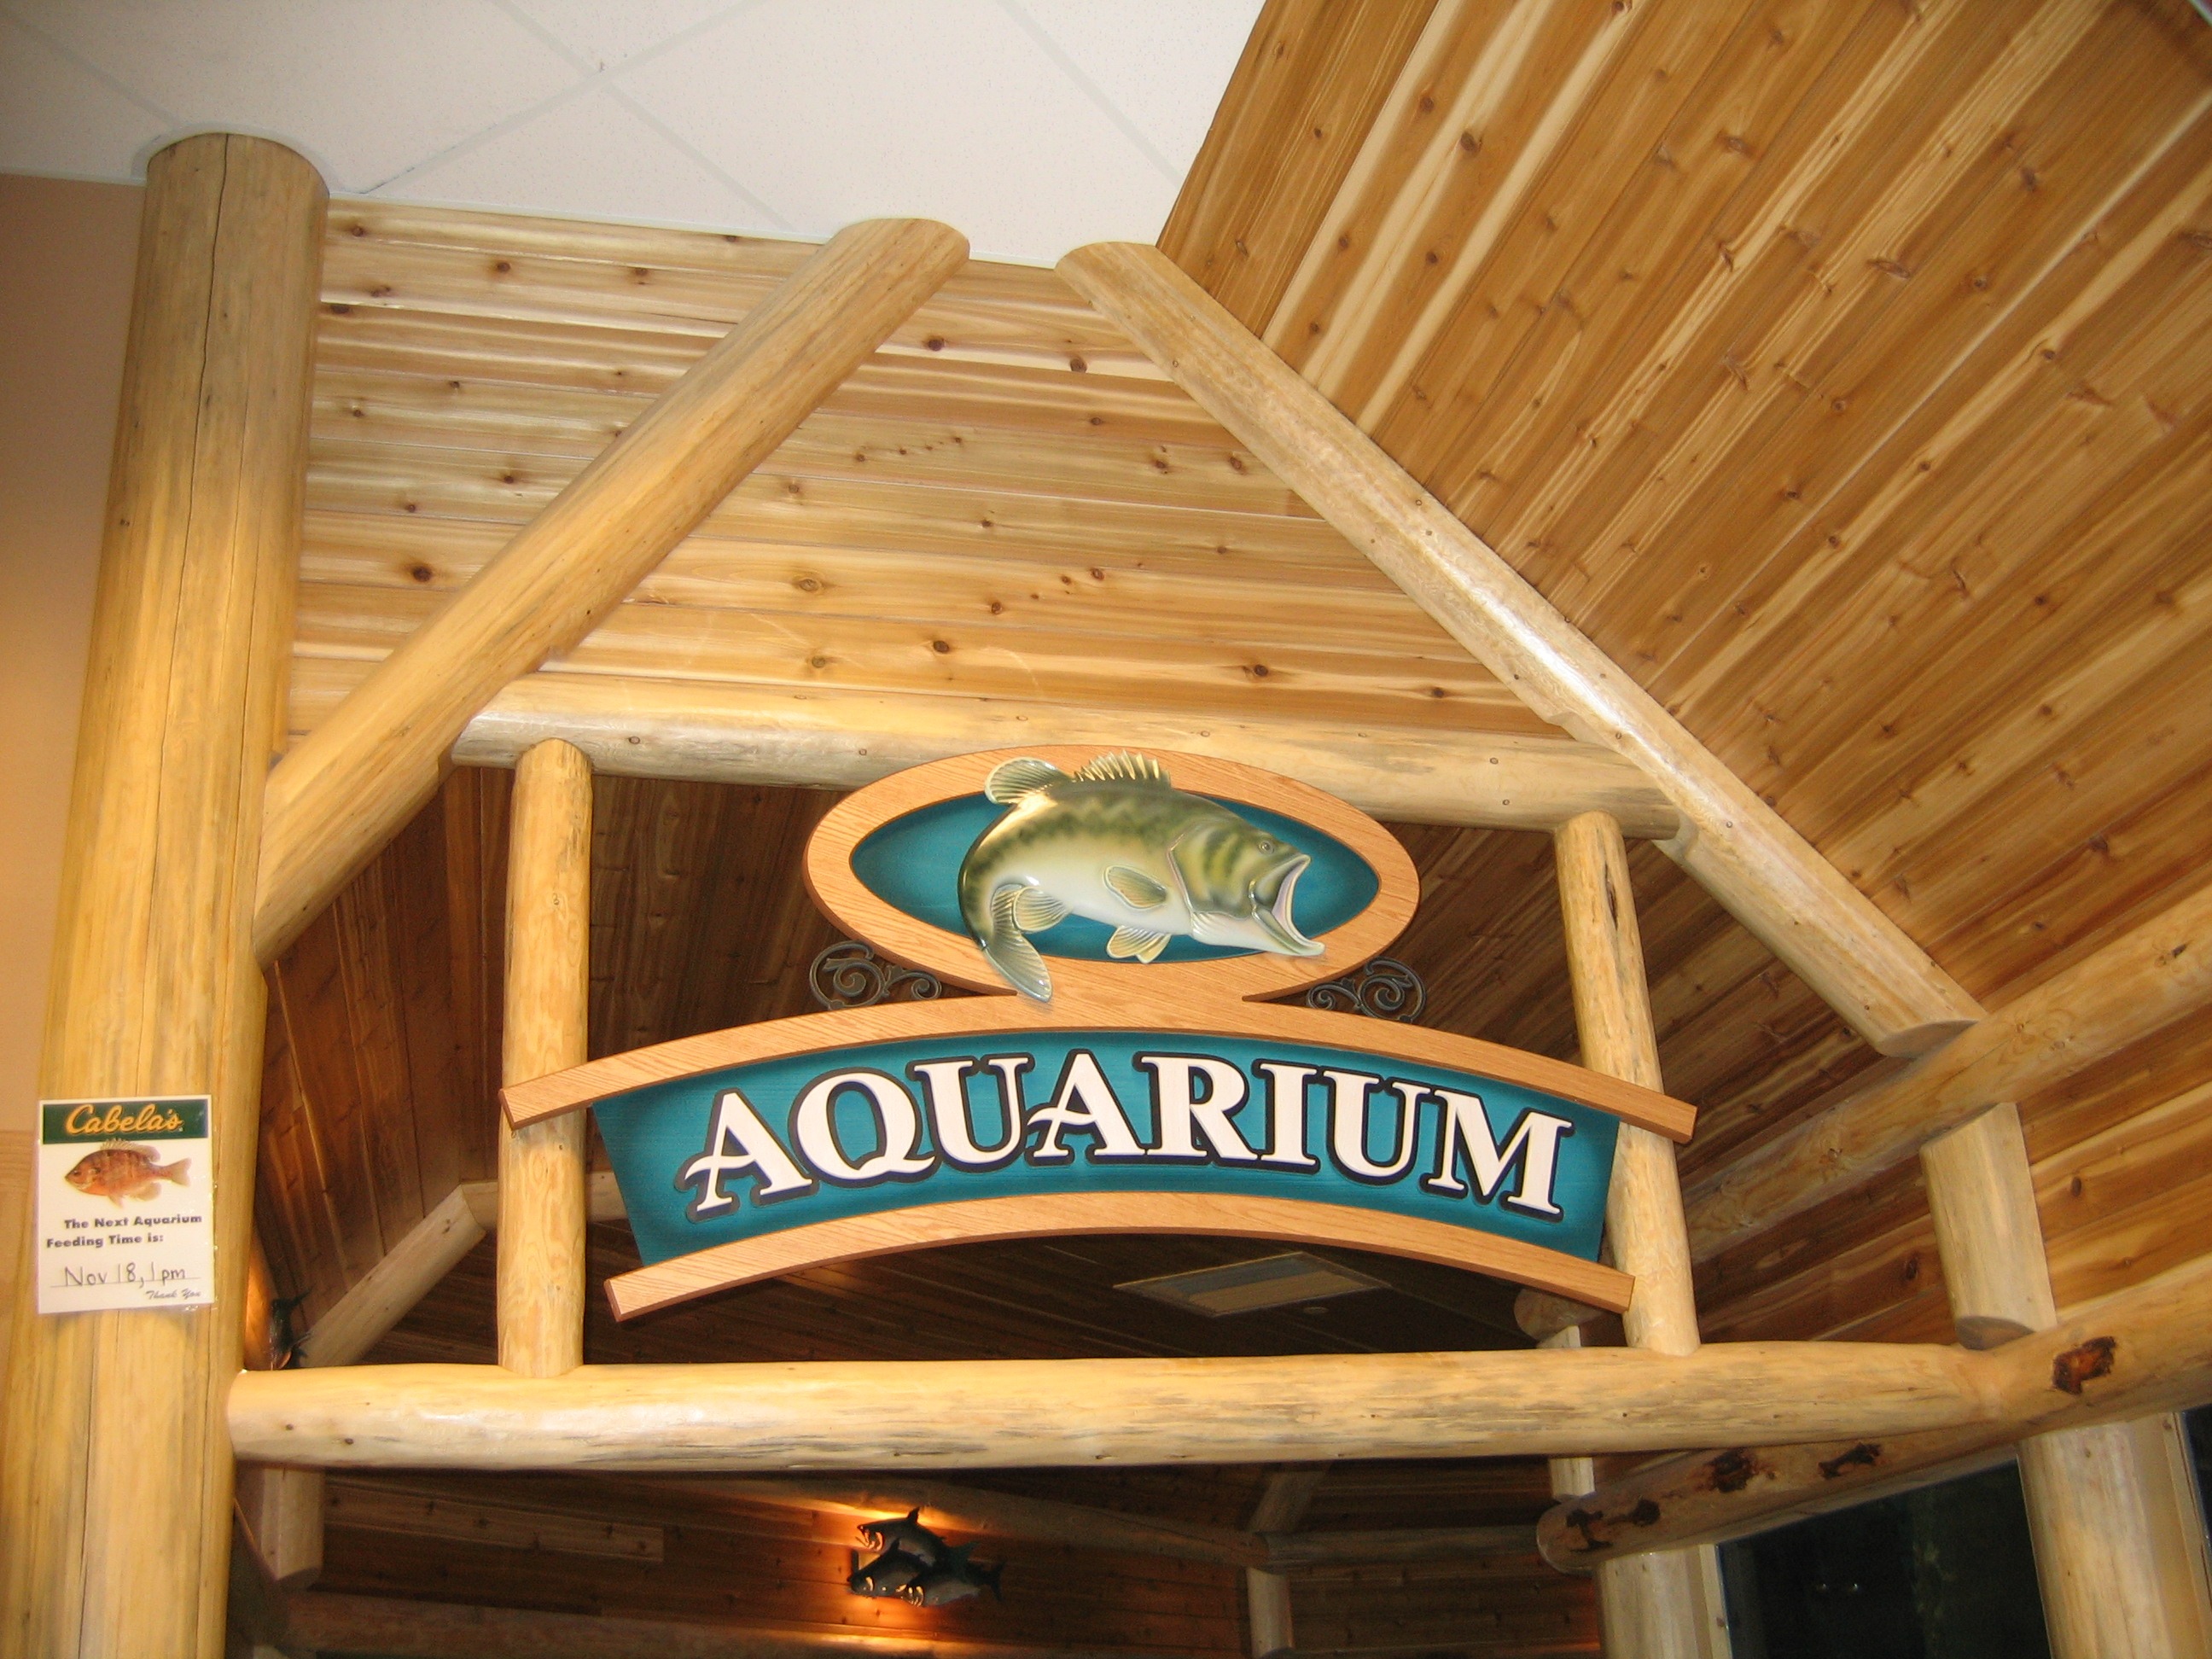 Cabela's Aquarium entrance hewn from natural wood logs